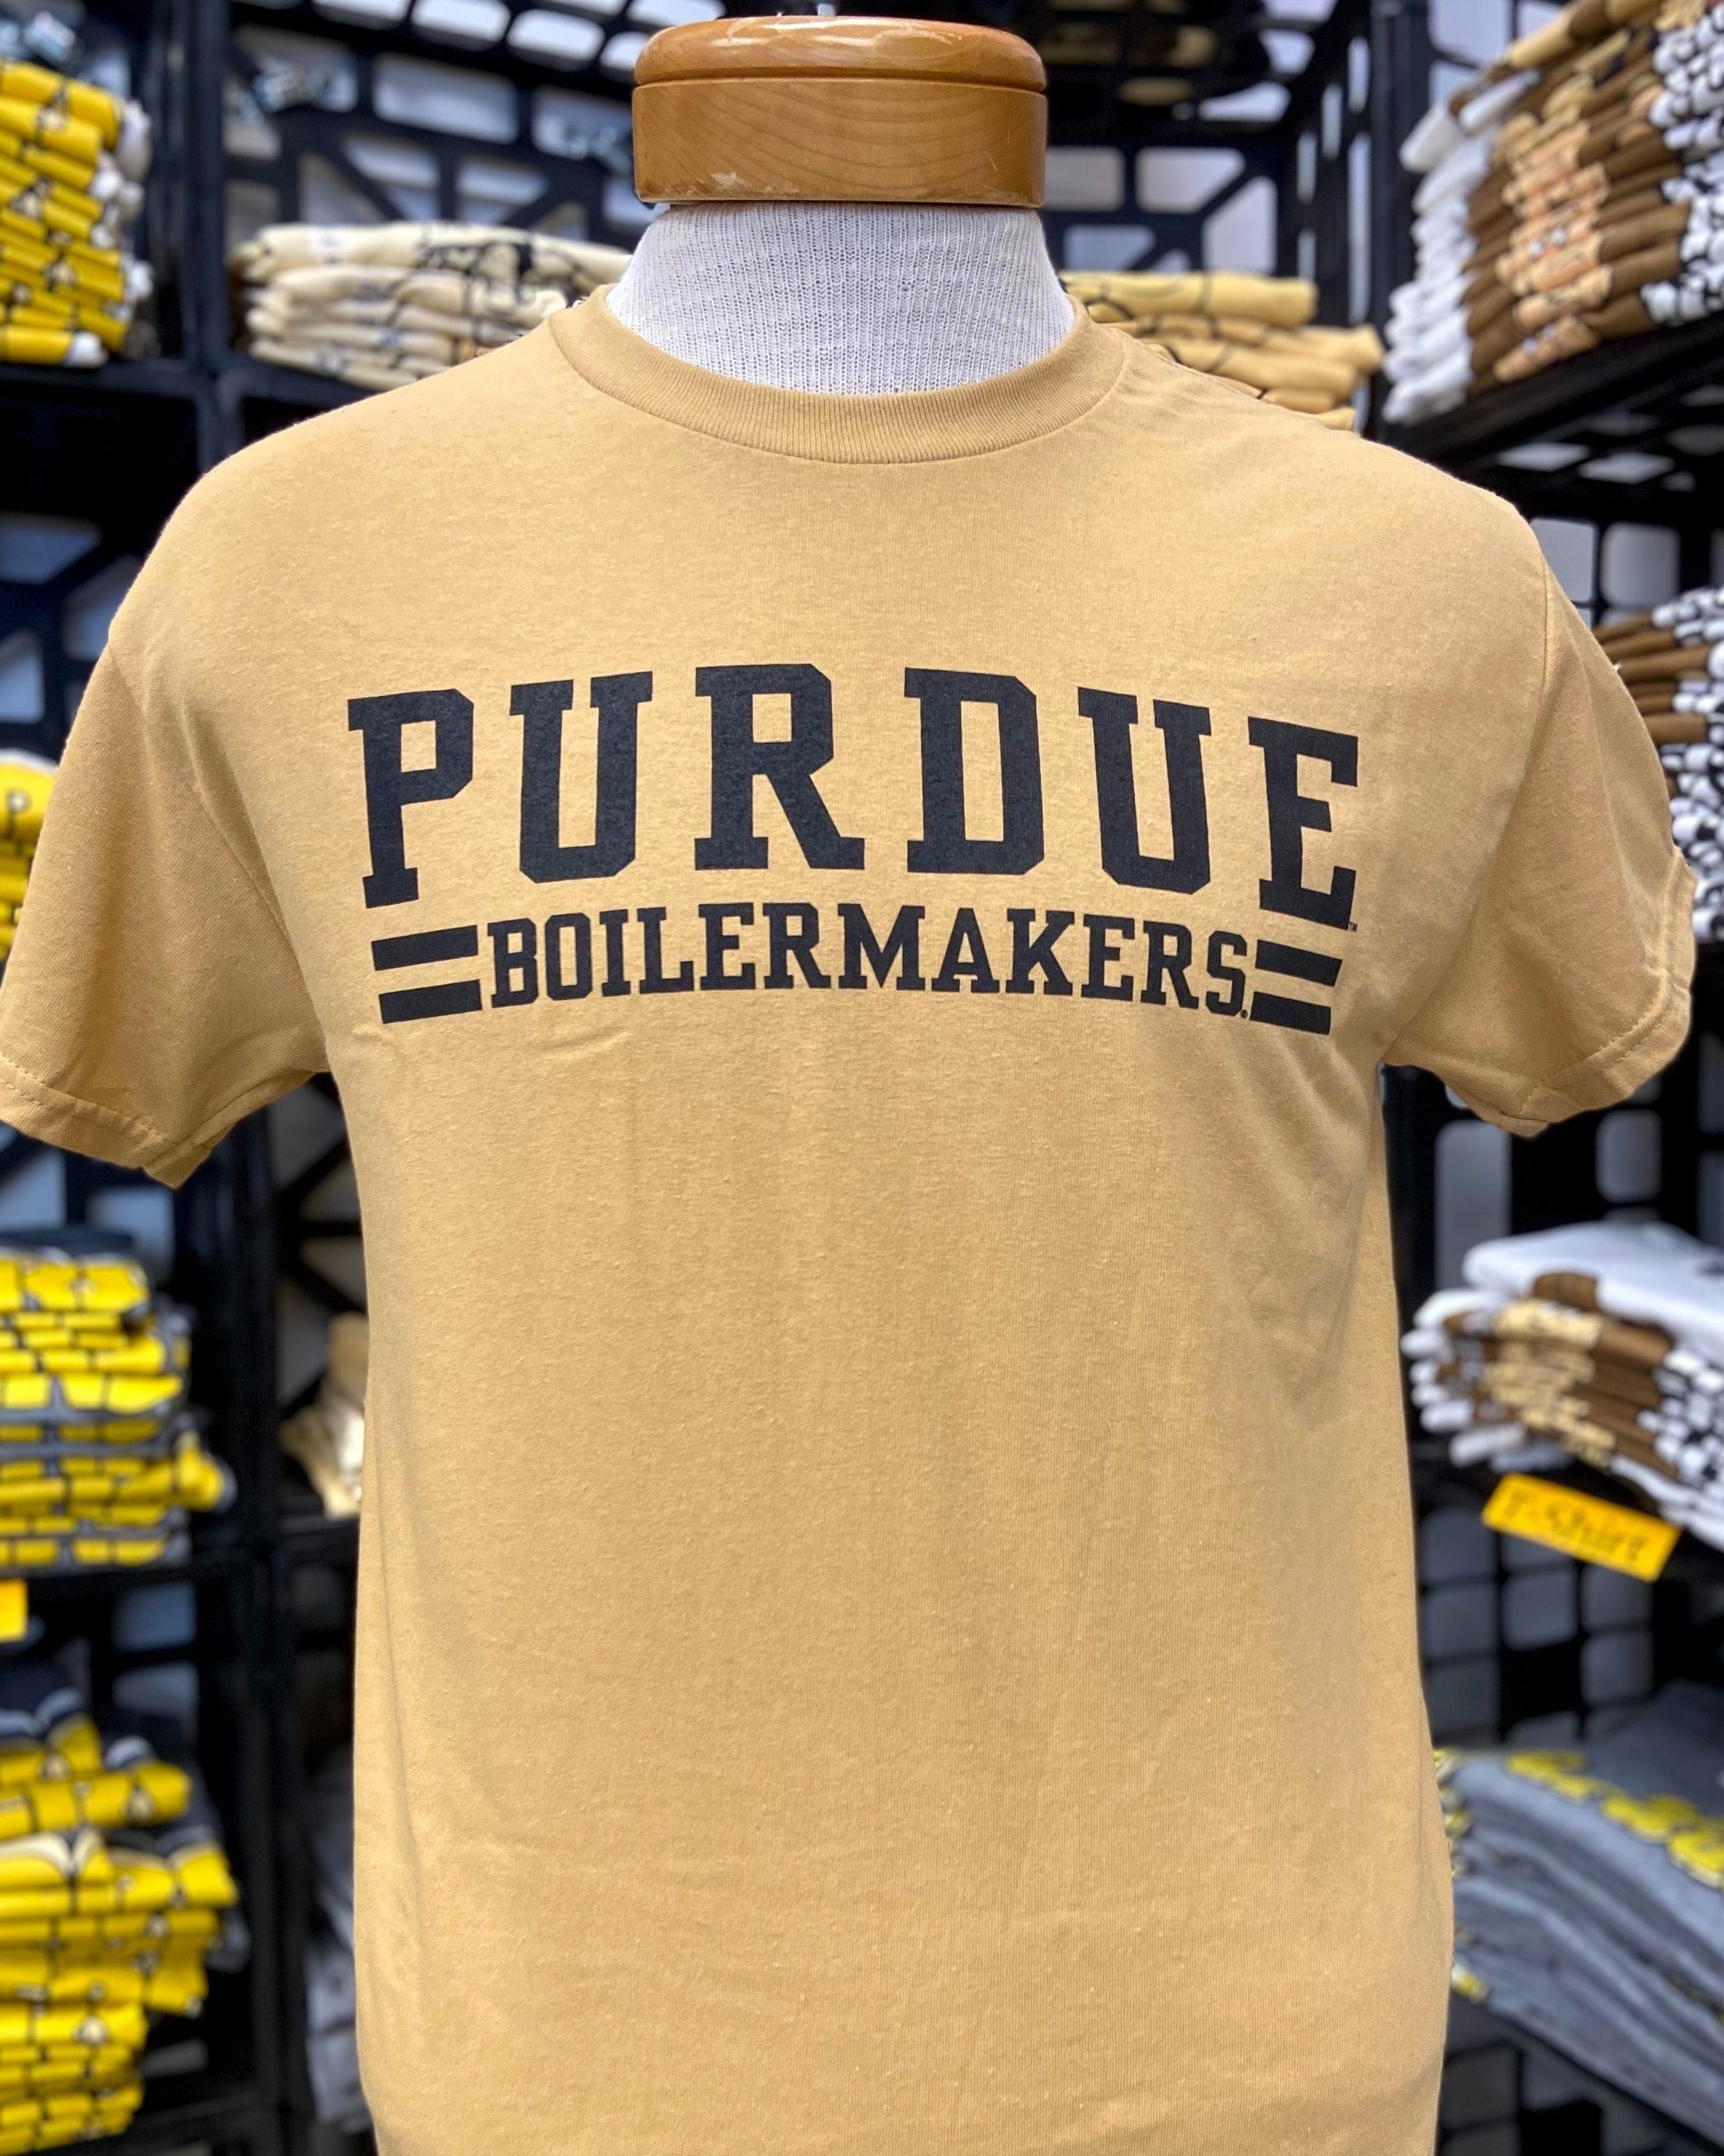 Purdue University Boilermakers Tank Top T-shirt size XL